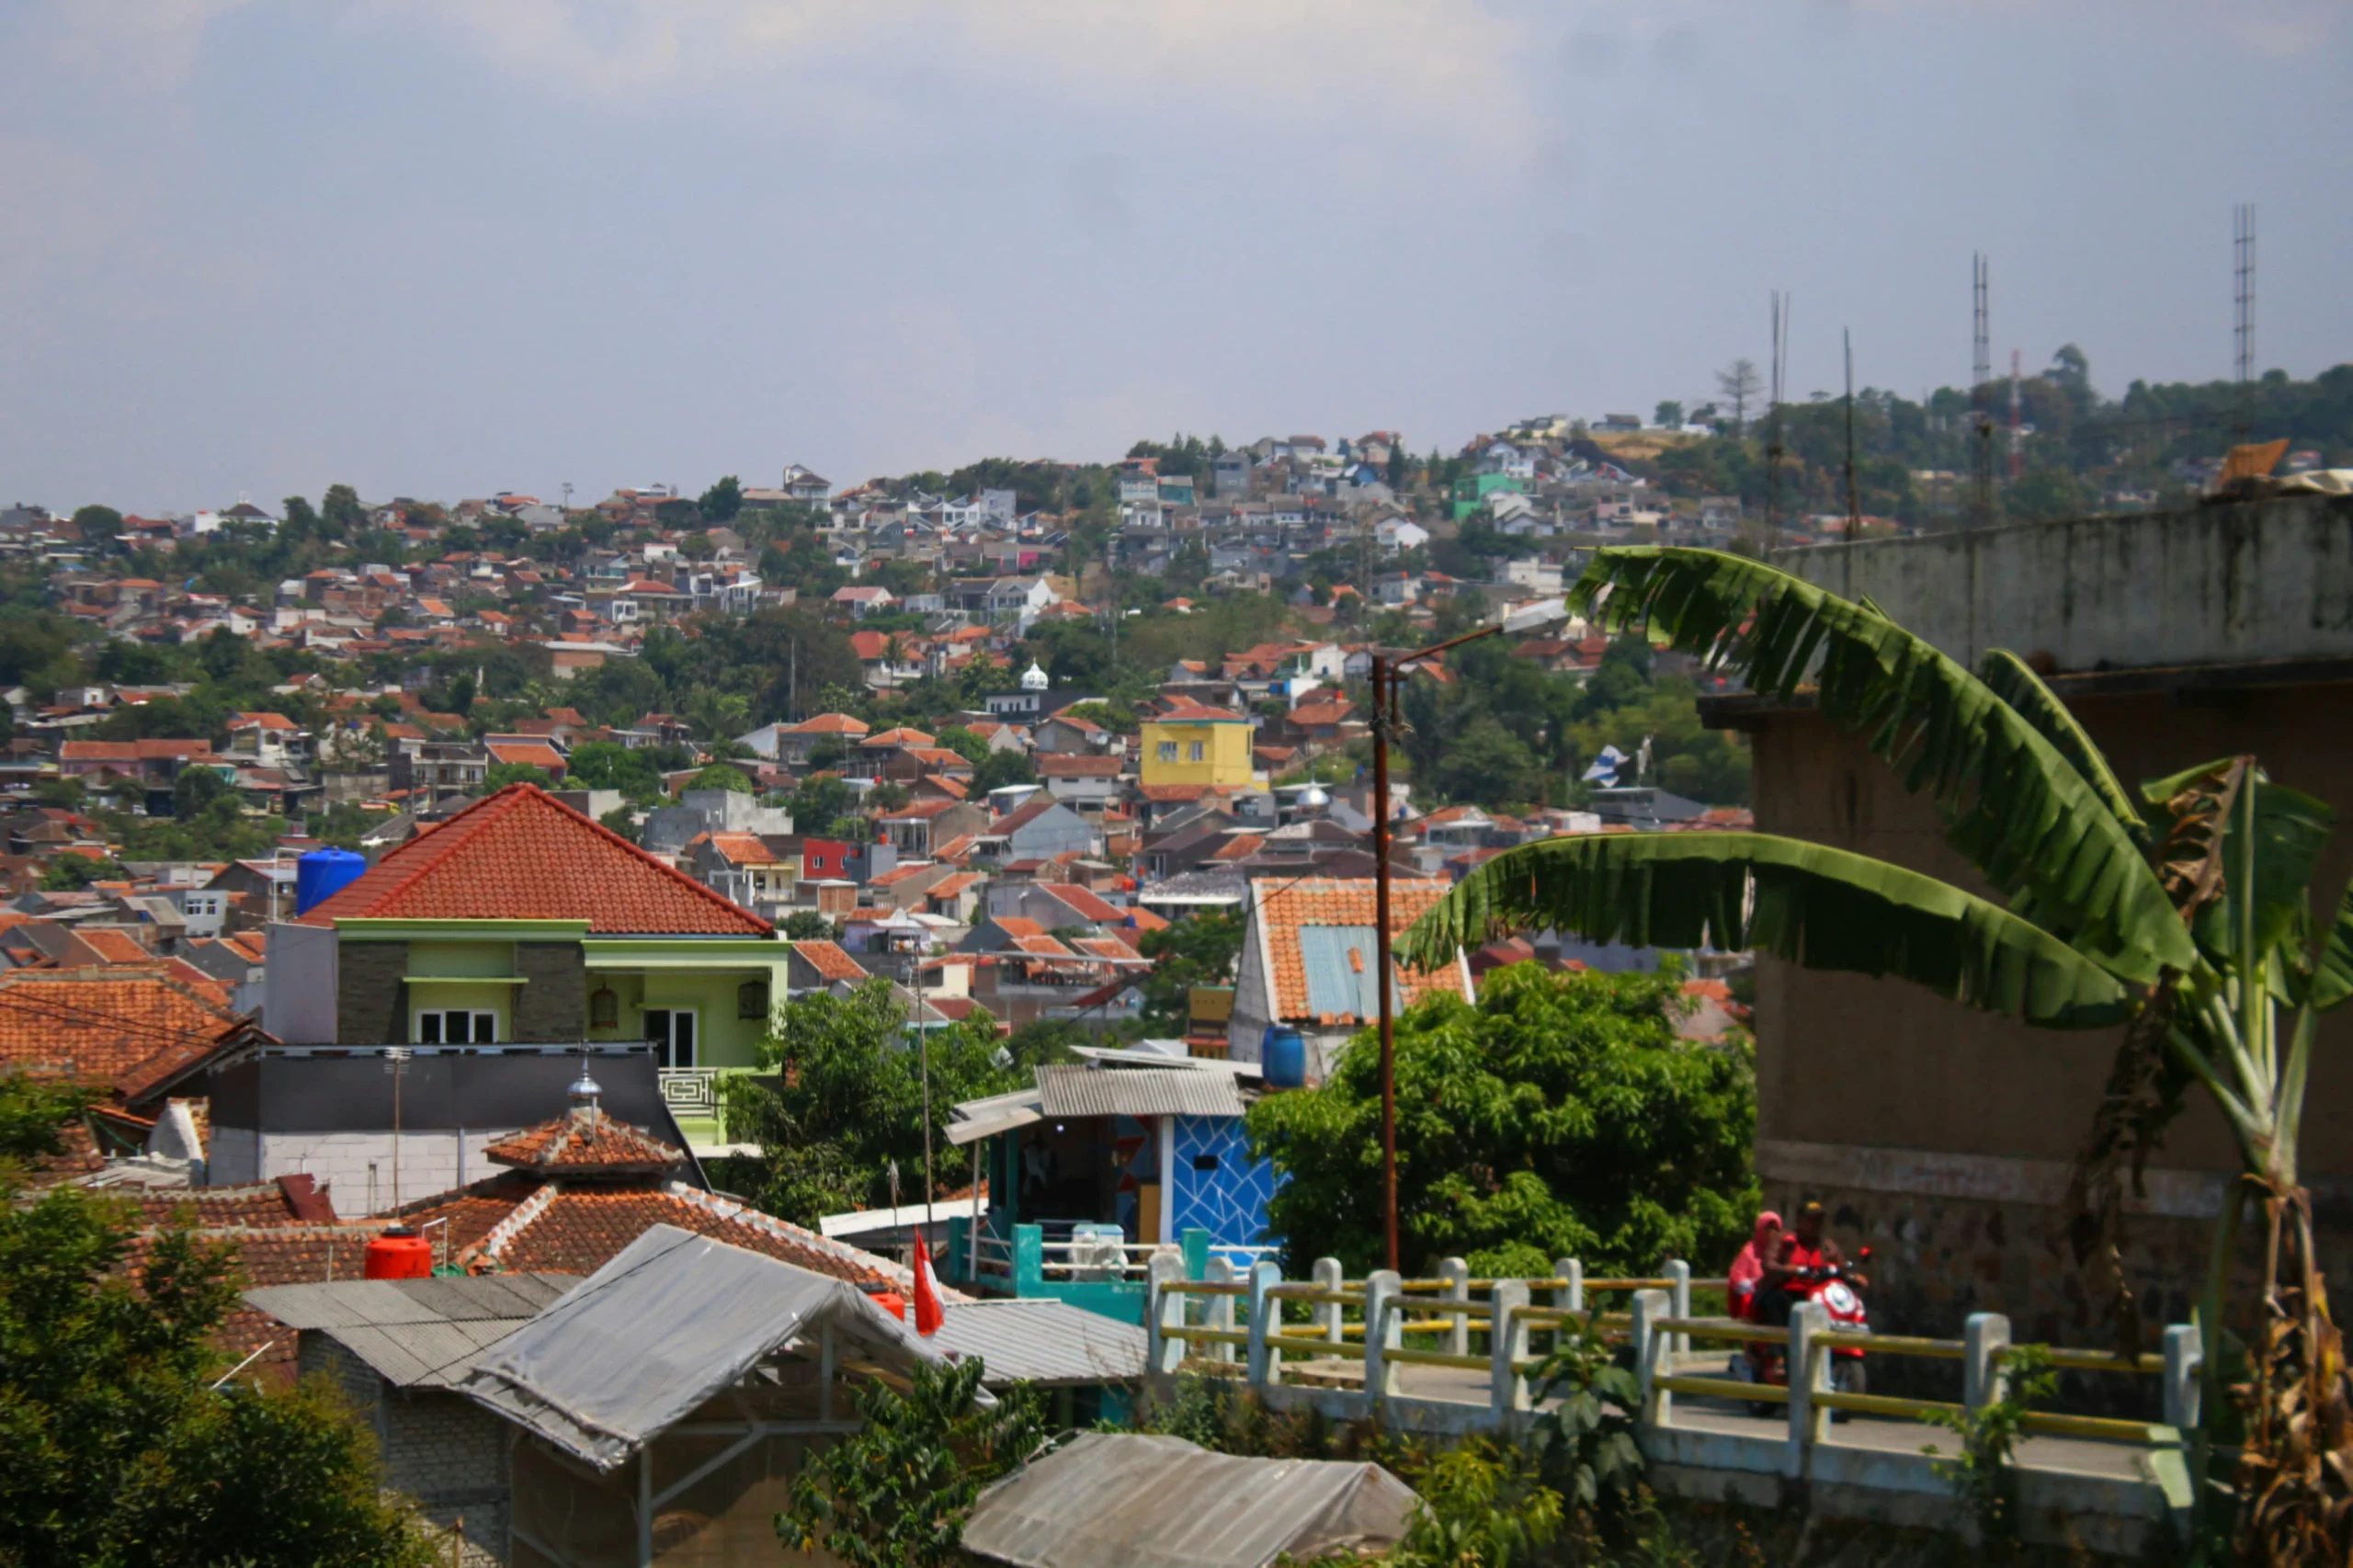 Pemukiman warga yang memenuhi kawasan Cekungan Bandung.